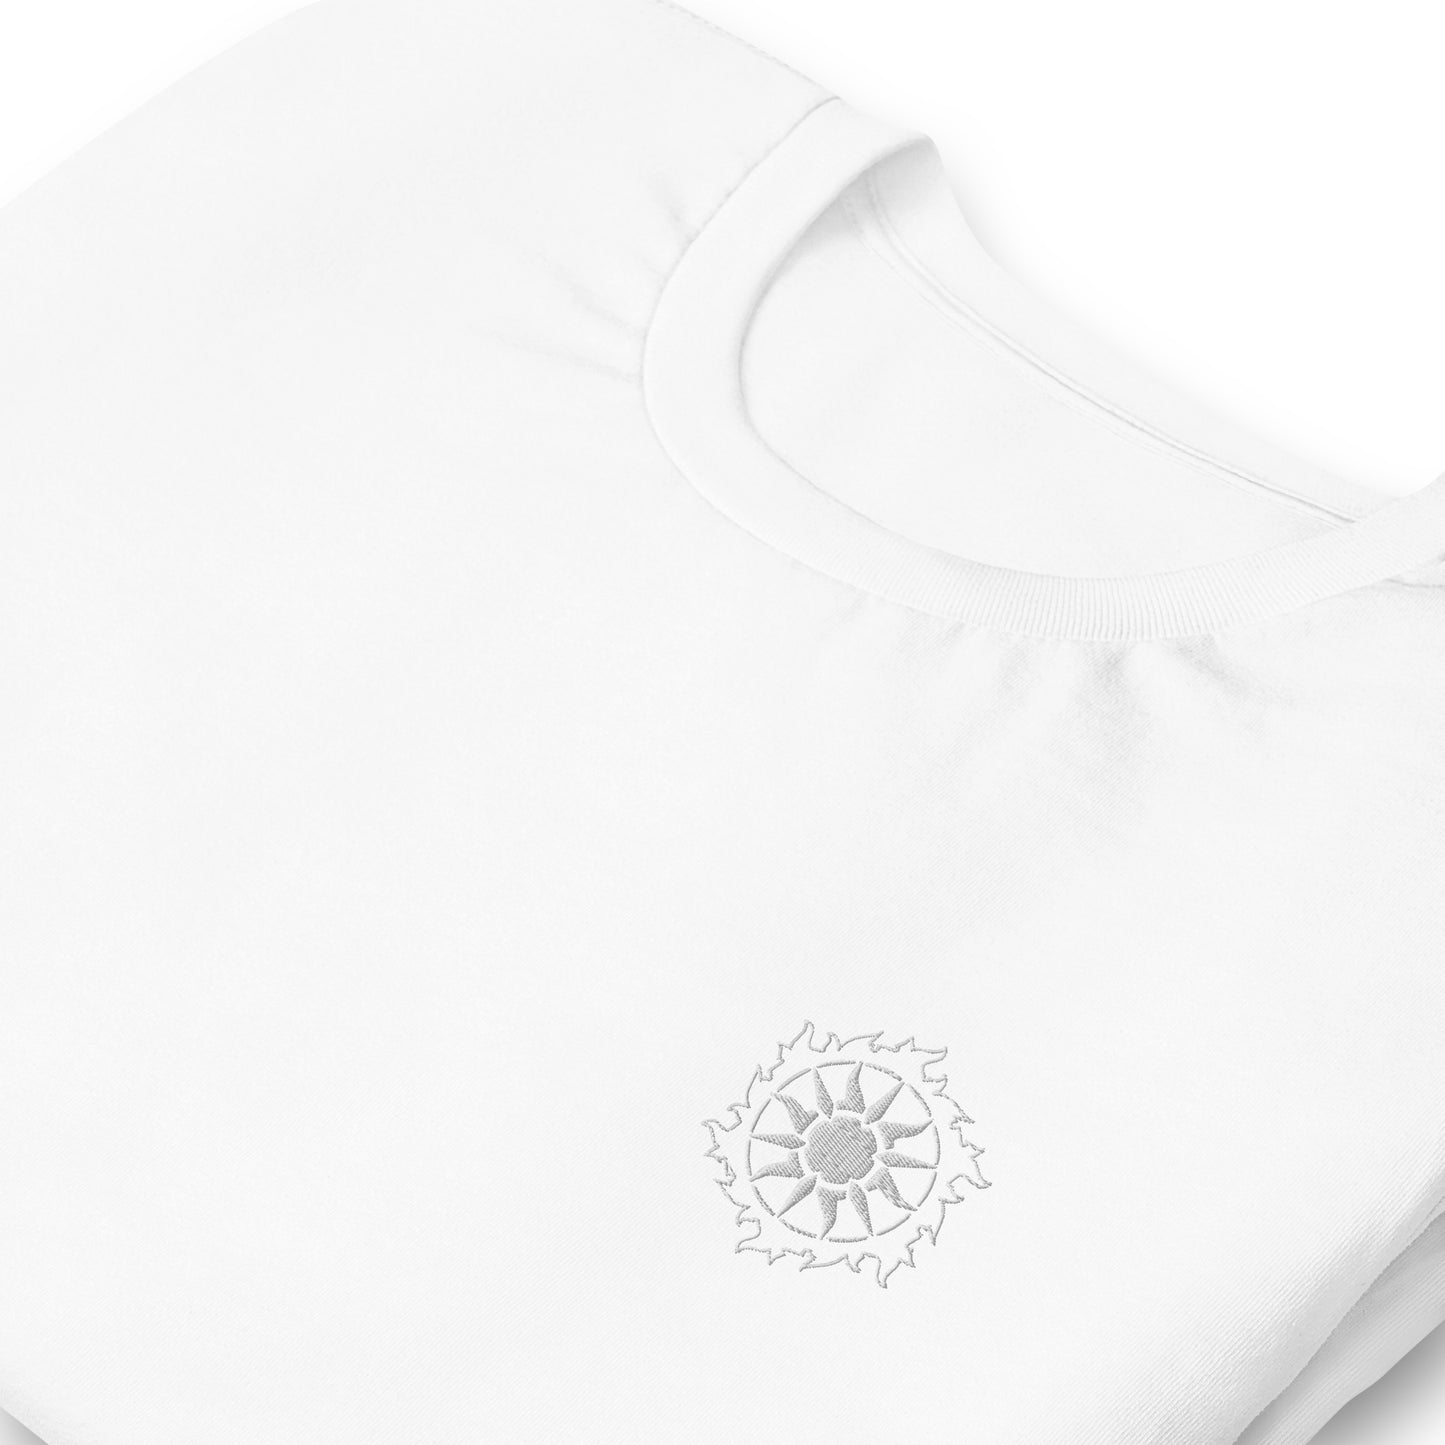 Jadd Empire Sun, Embroidered - Sigil Attire - Unisex T-shirt